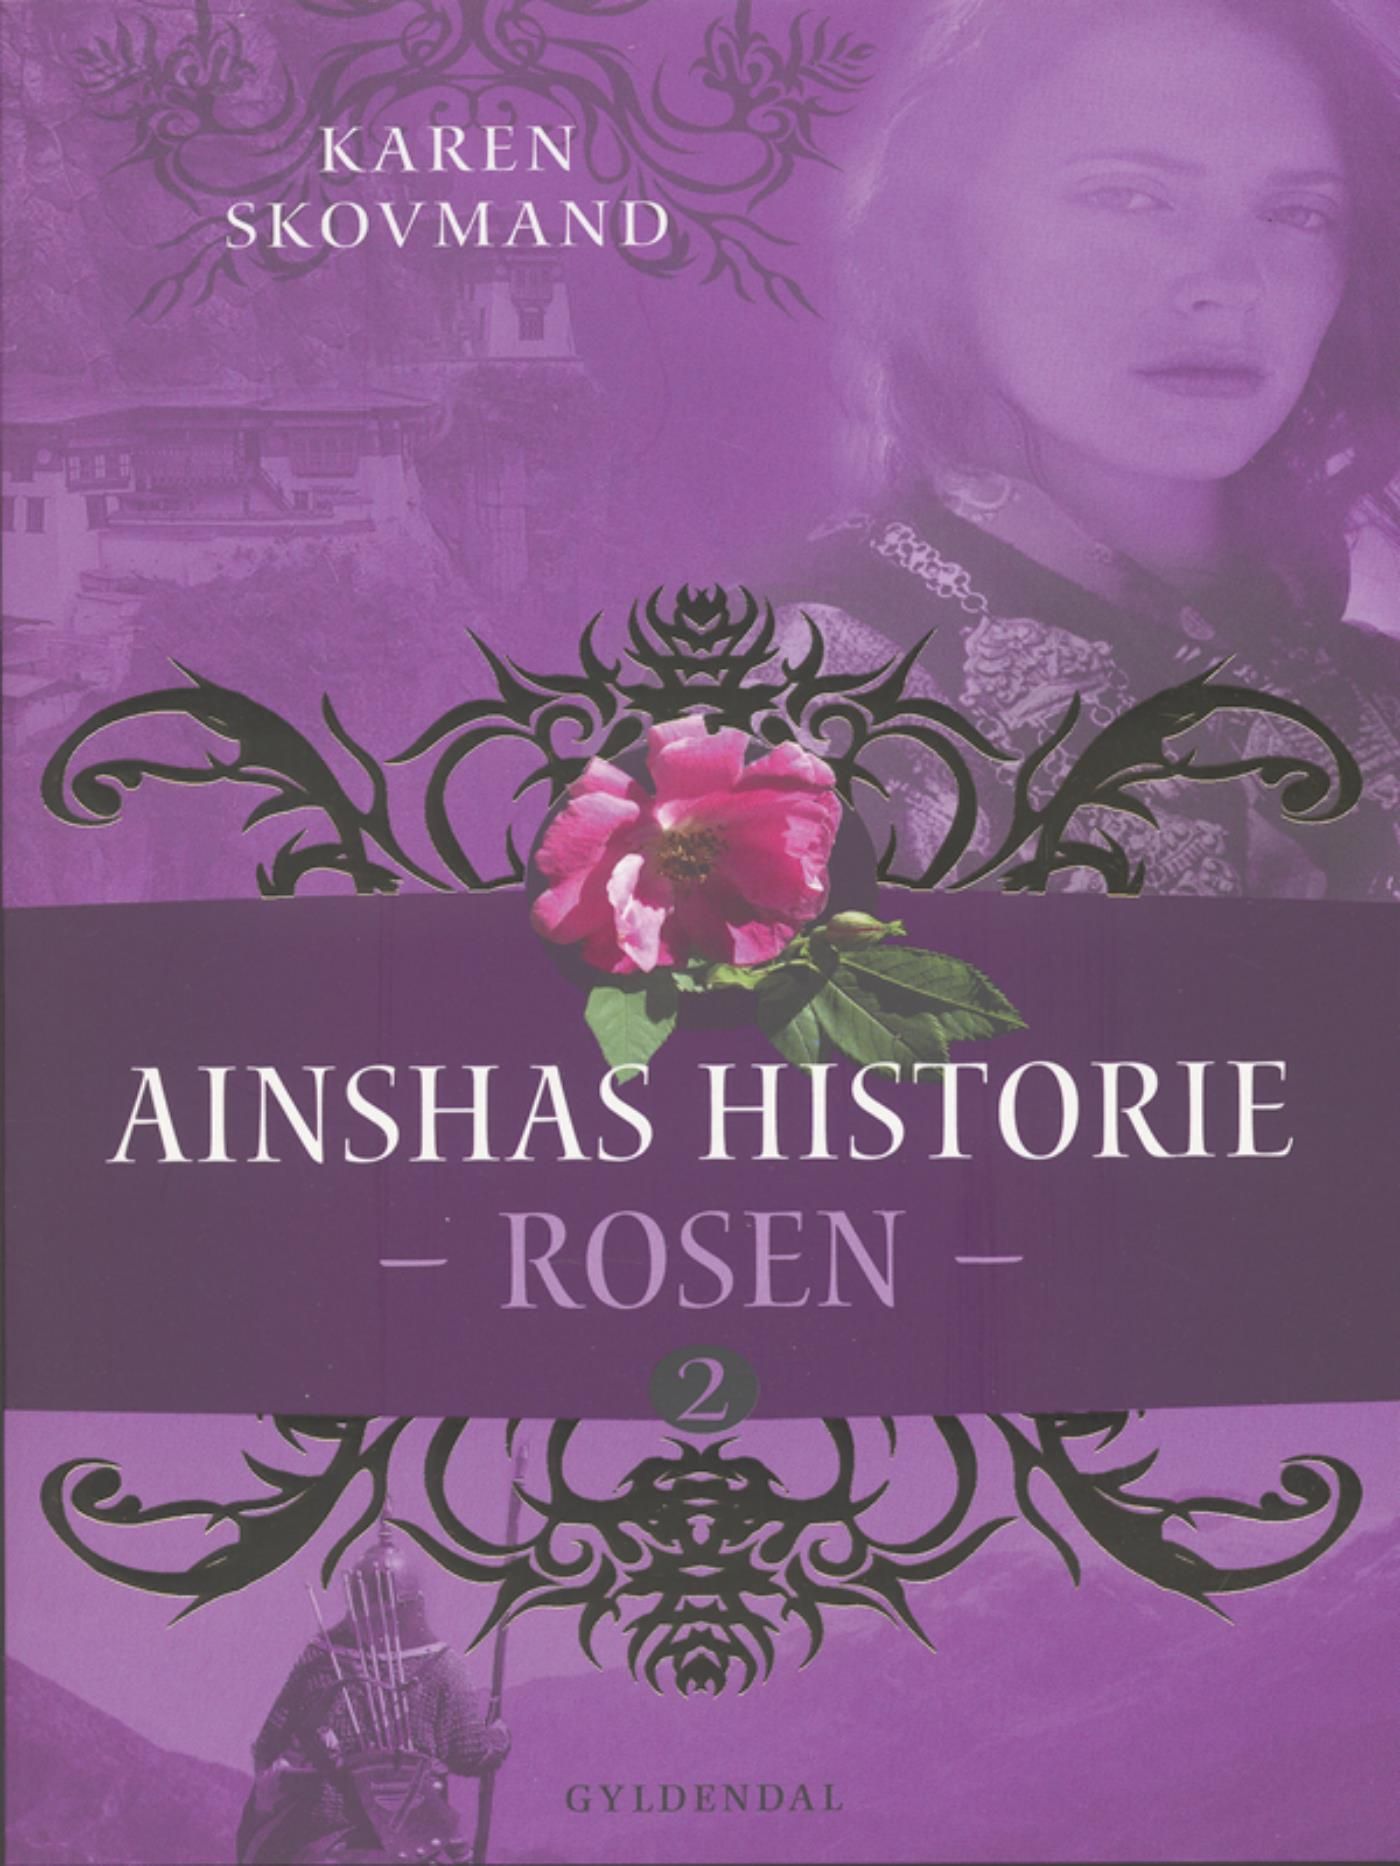 Ainshas historie 2 - Rosen, eBook by Karen Skovmand Jensen